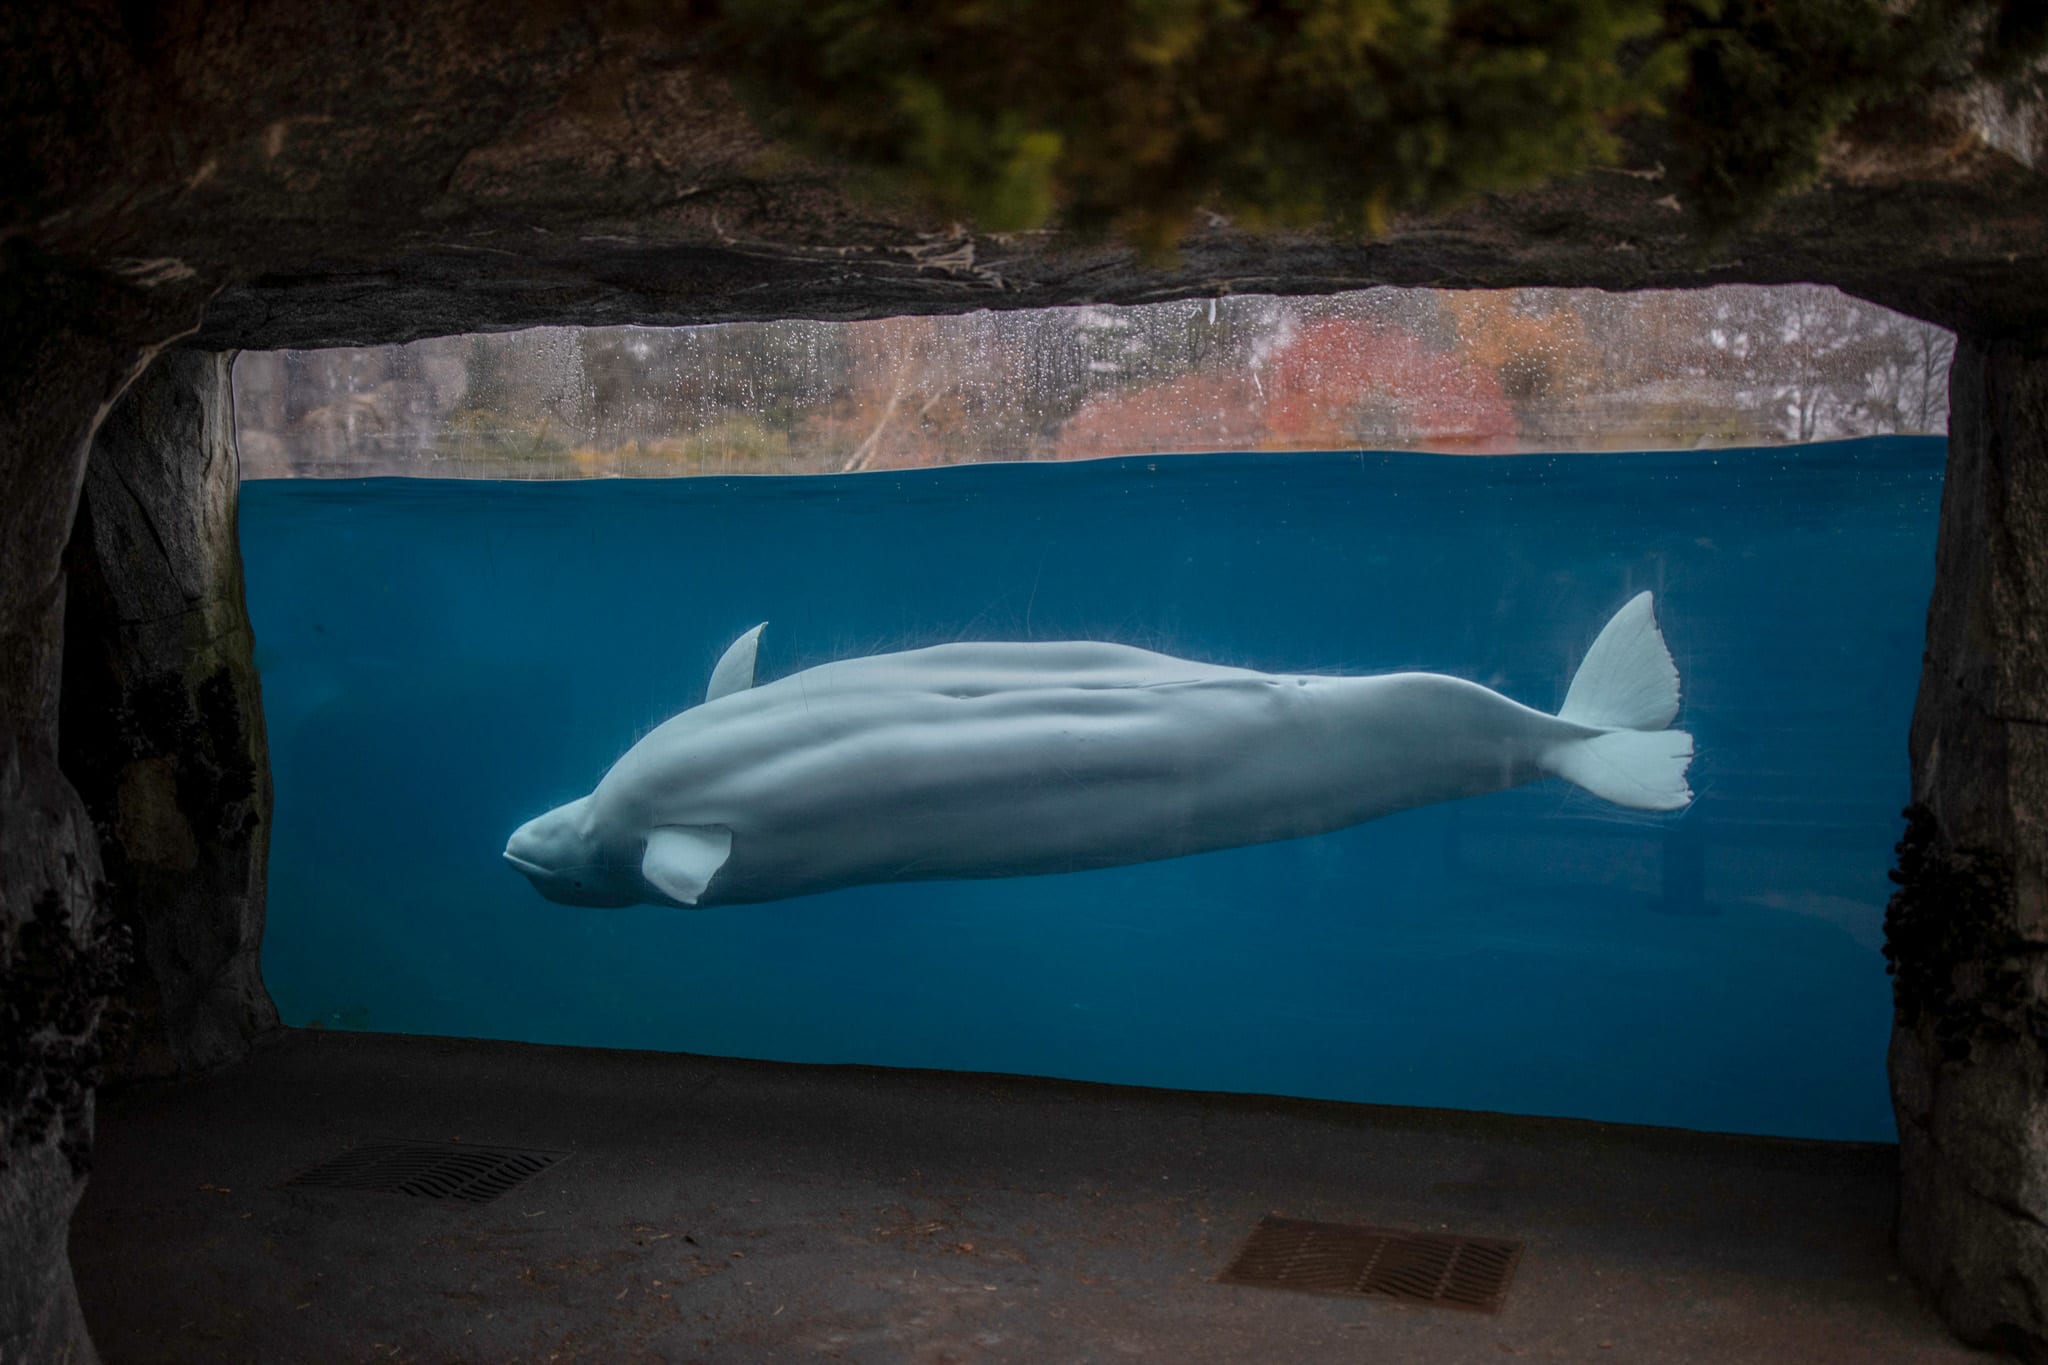 beluga whale images